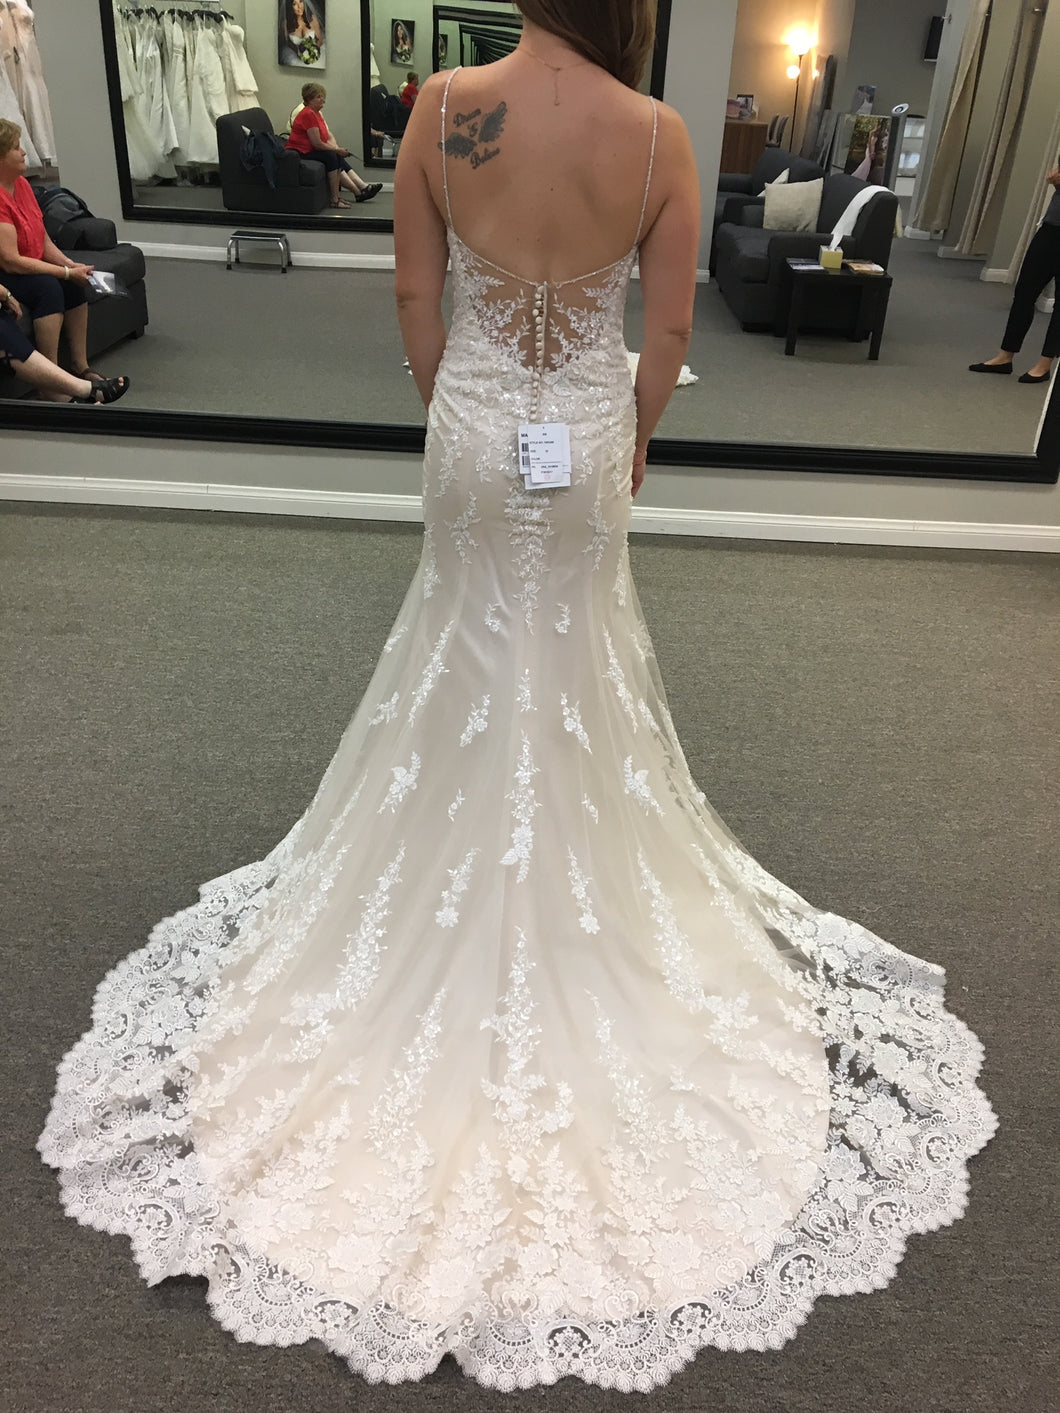 Maggie Sottero 'Nola' size 8 new wedding dress back view on bride